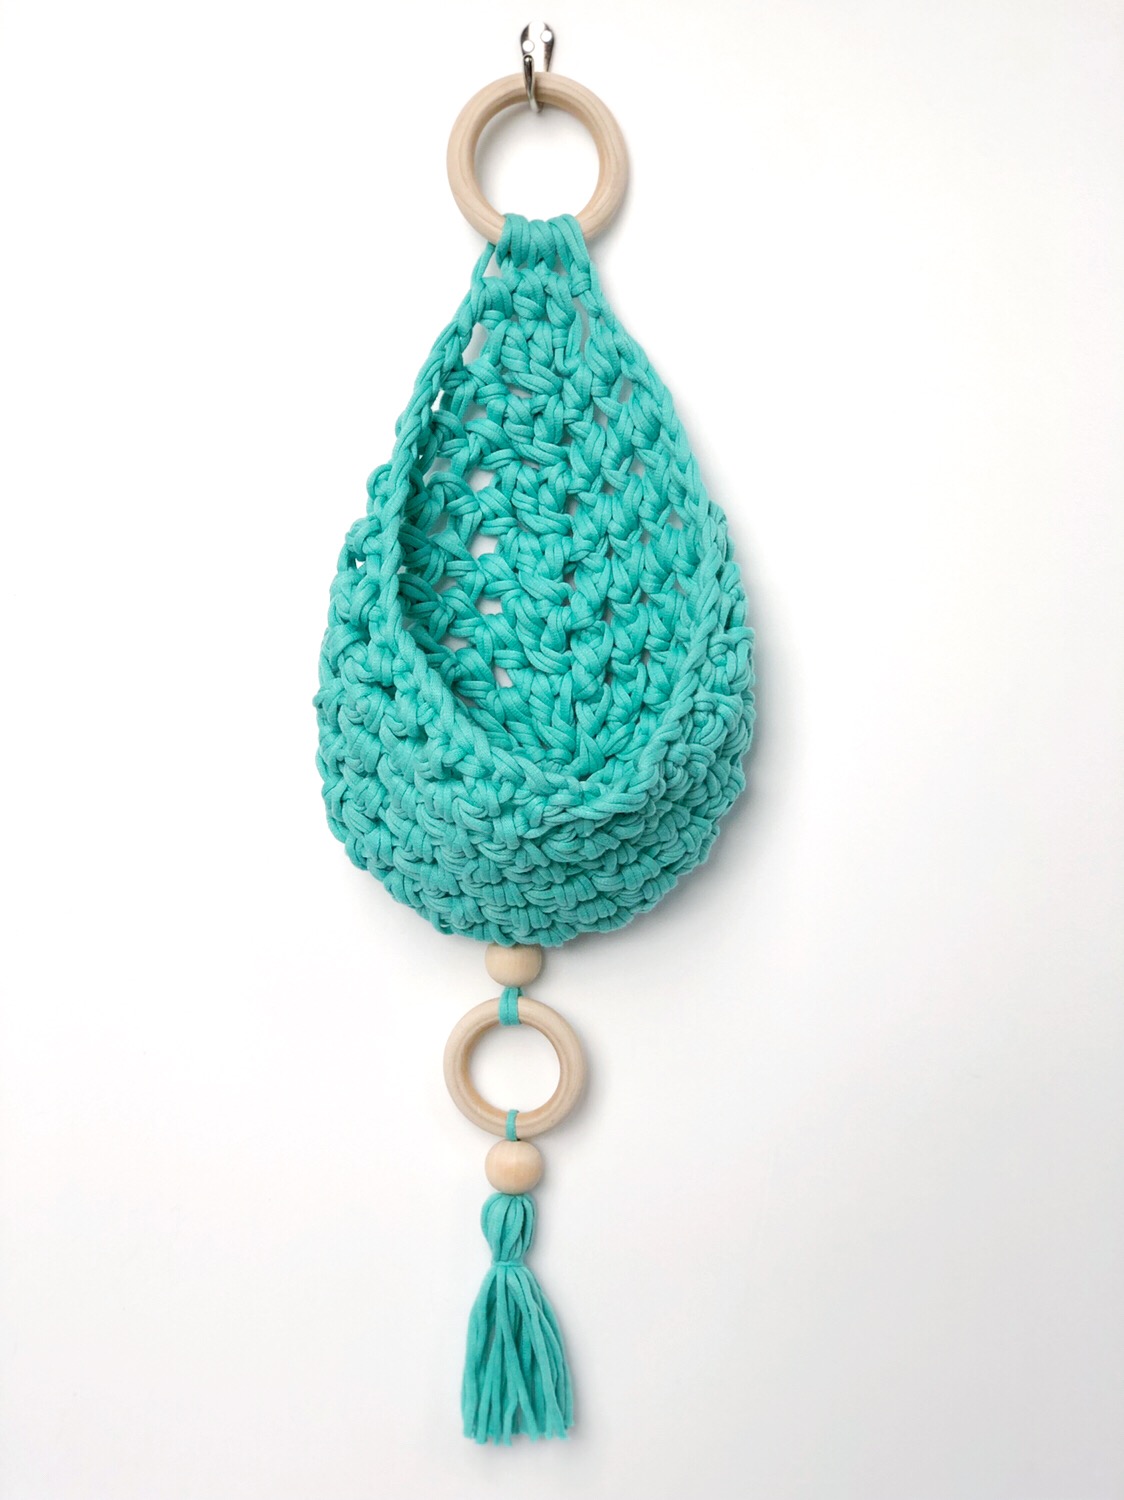 Cozy Crochet Hanging Planter